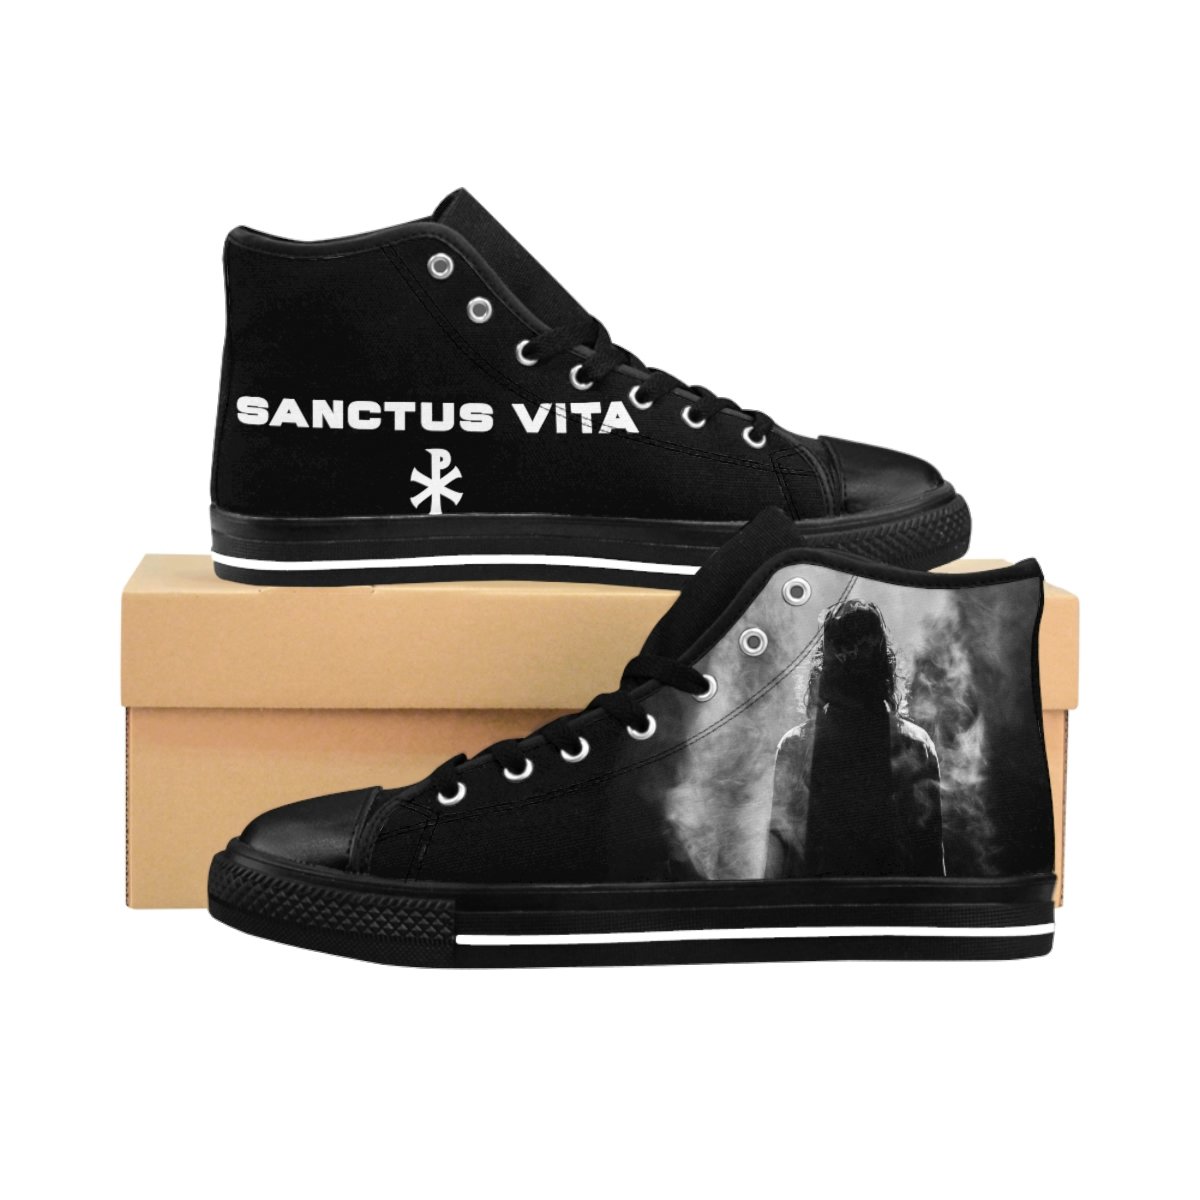 Sanctus Vita Women’s High-top Sneakers